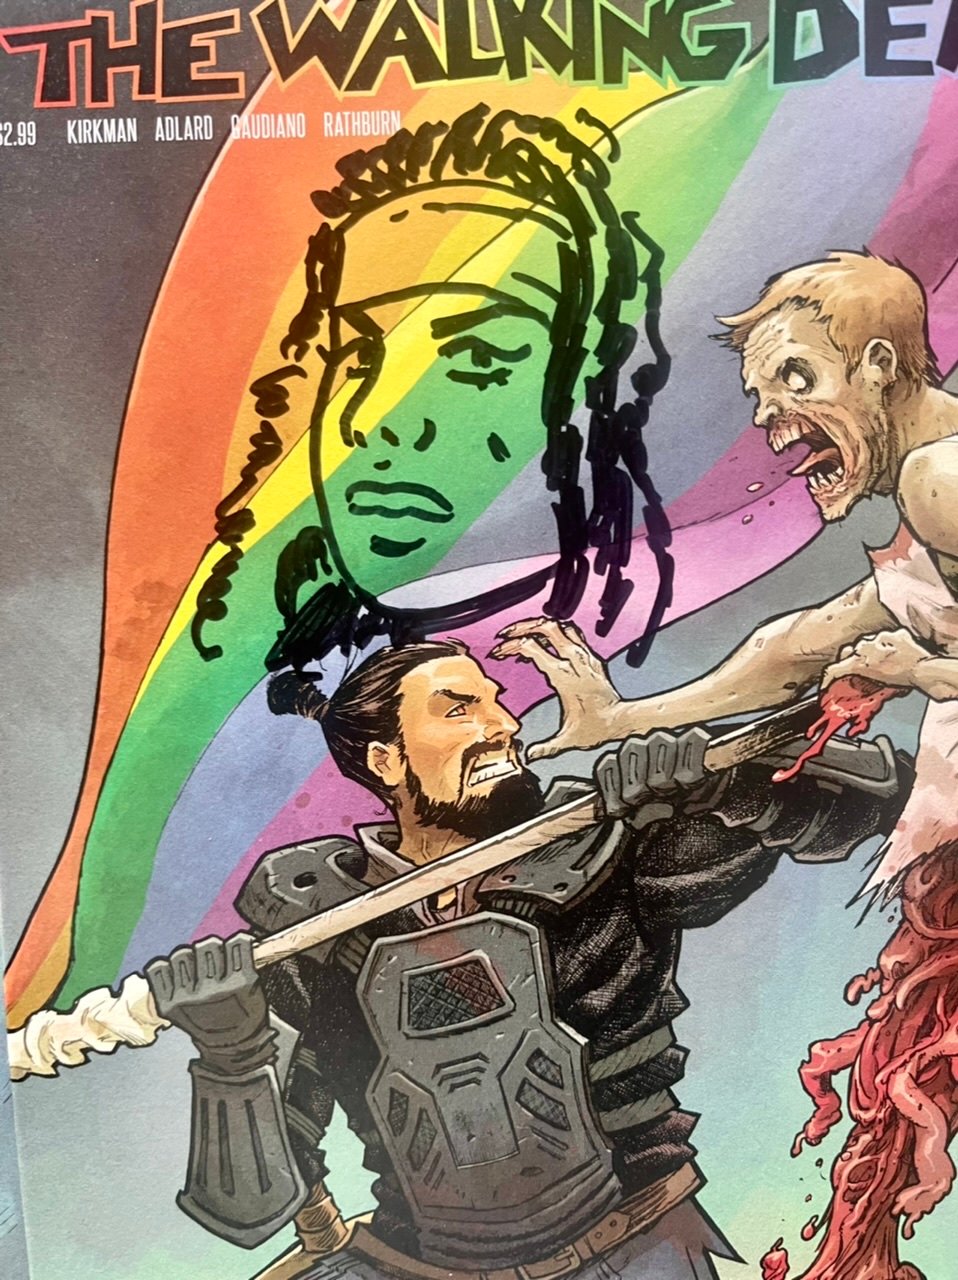 Image of Walking Dead Pride variant cover